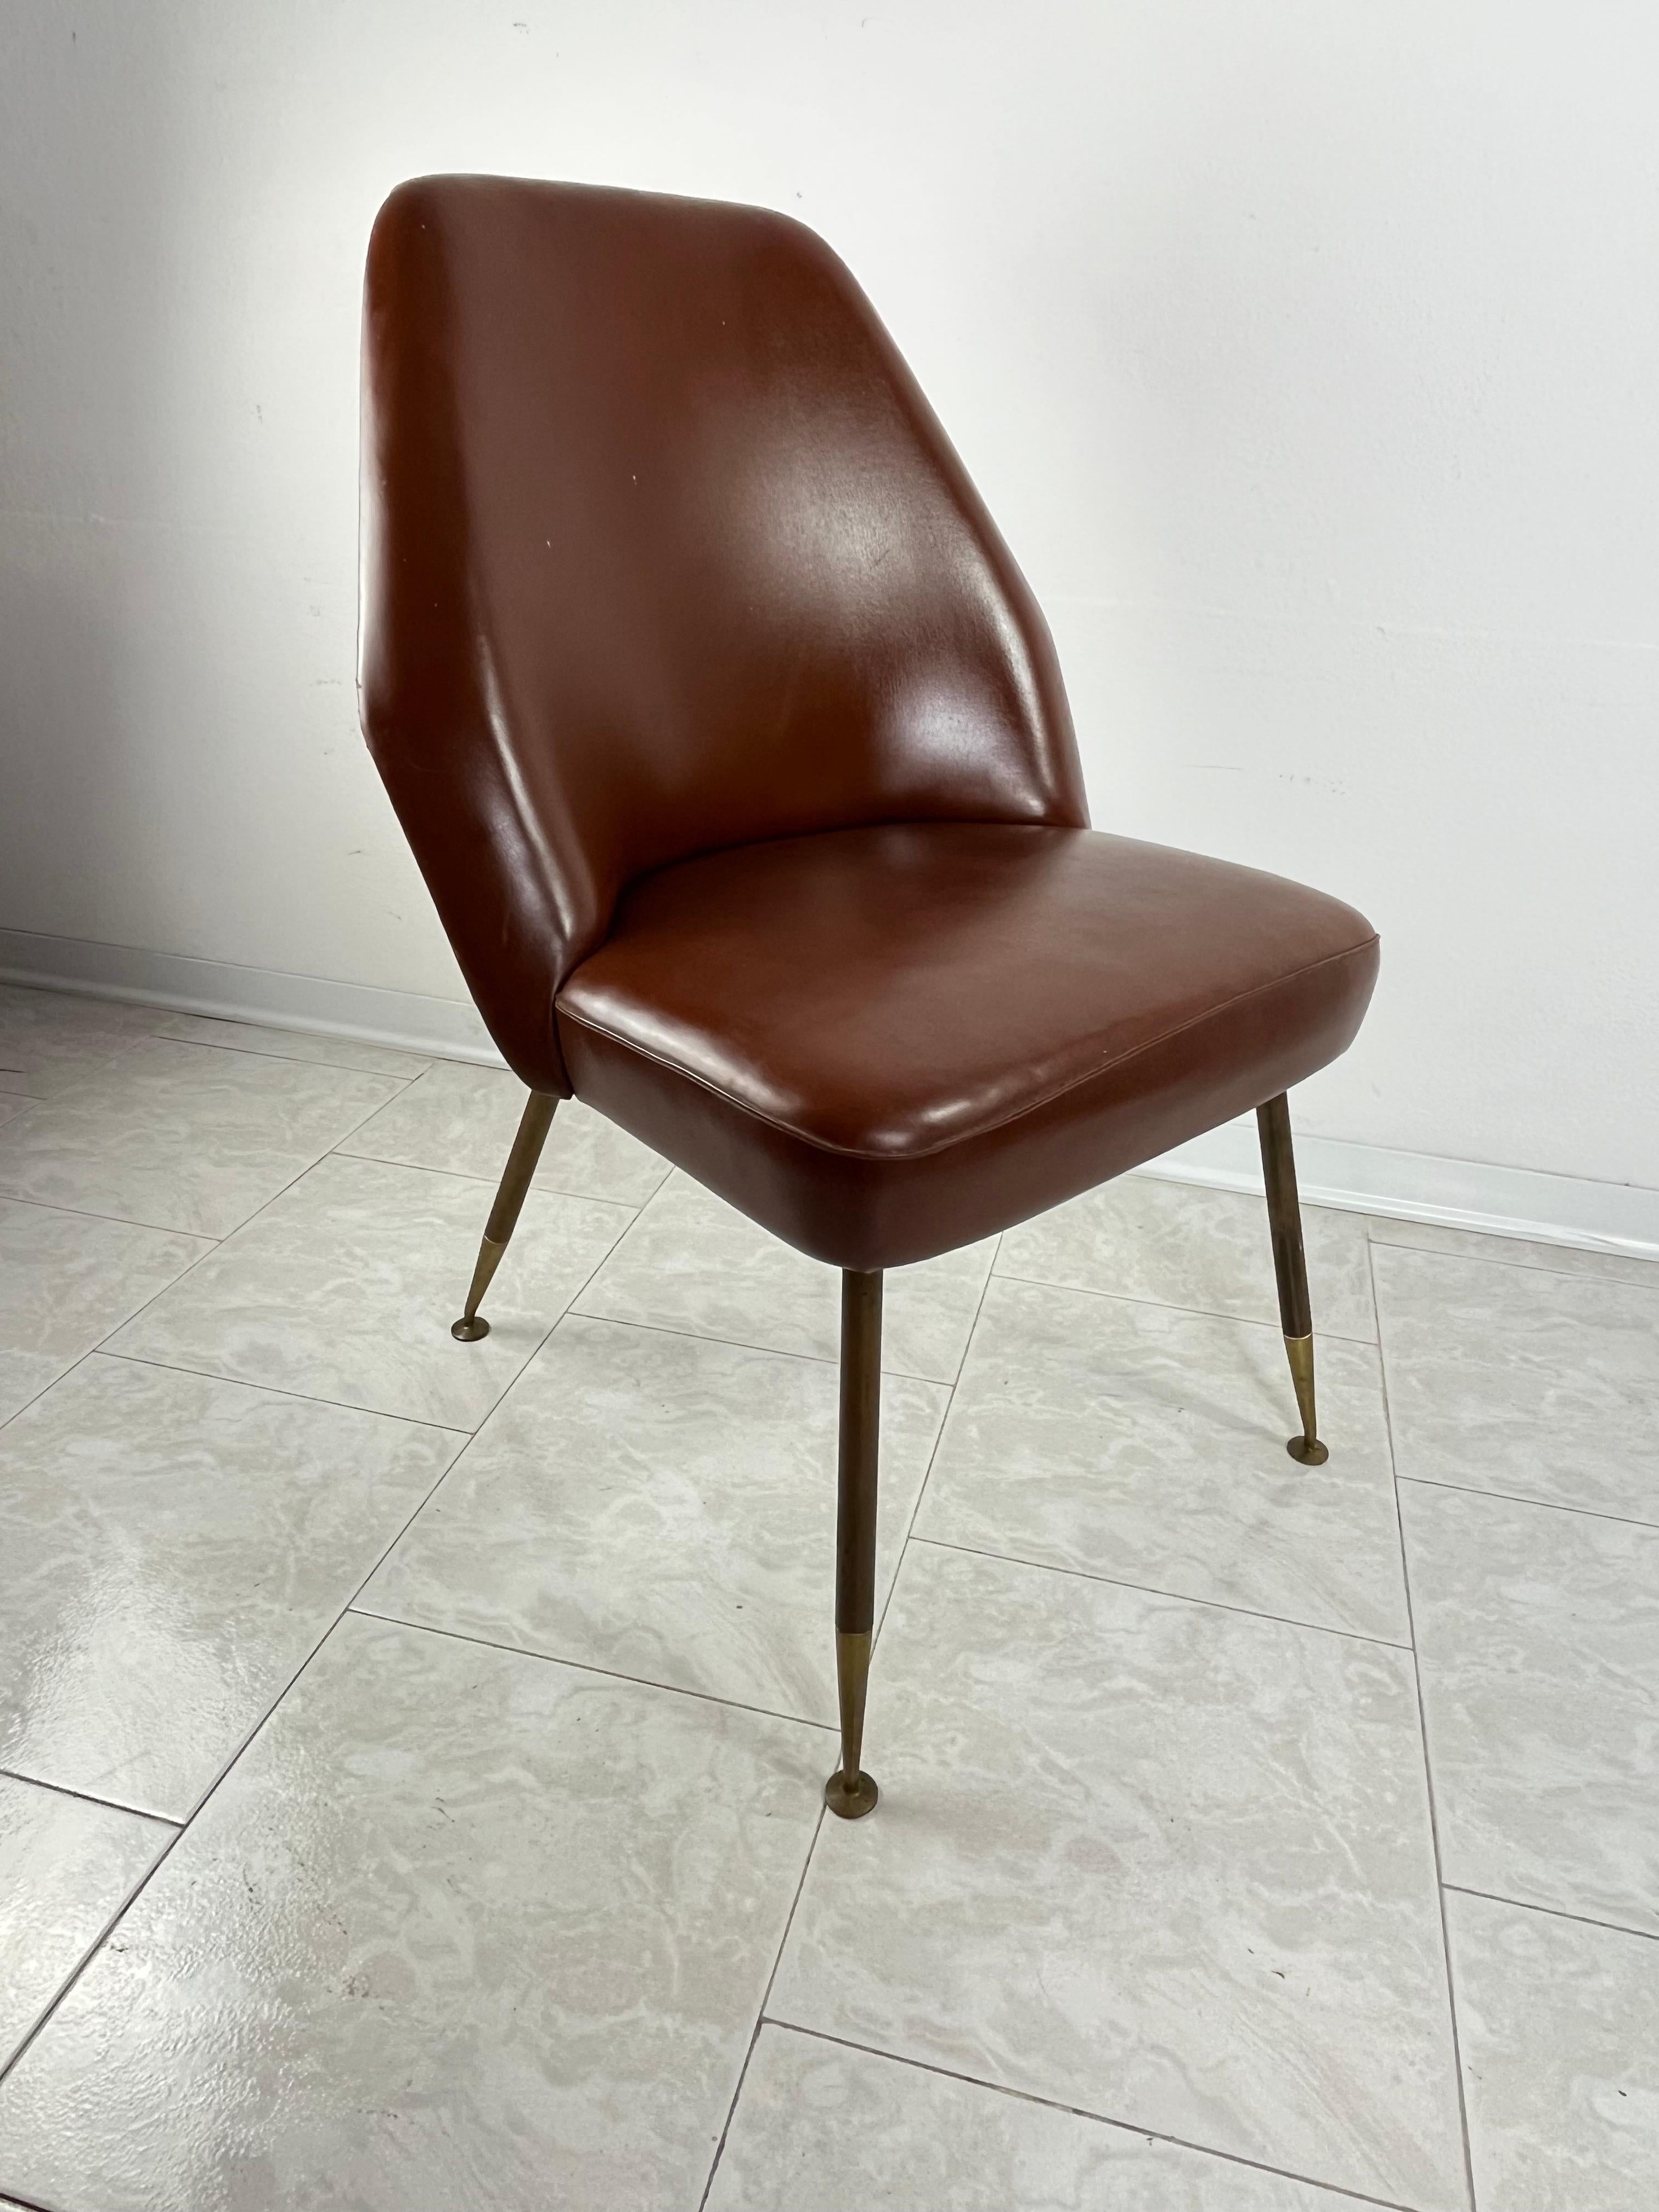 Metal Mid-Century Campanula Model Chair By Carlo Pagani For Arflex 1952 For Sale